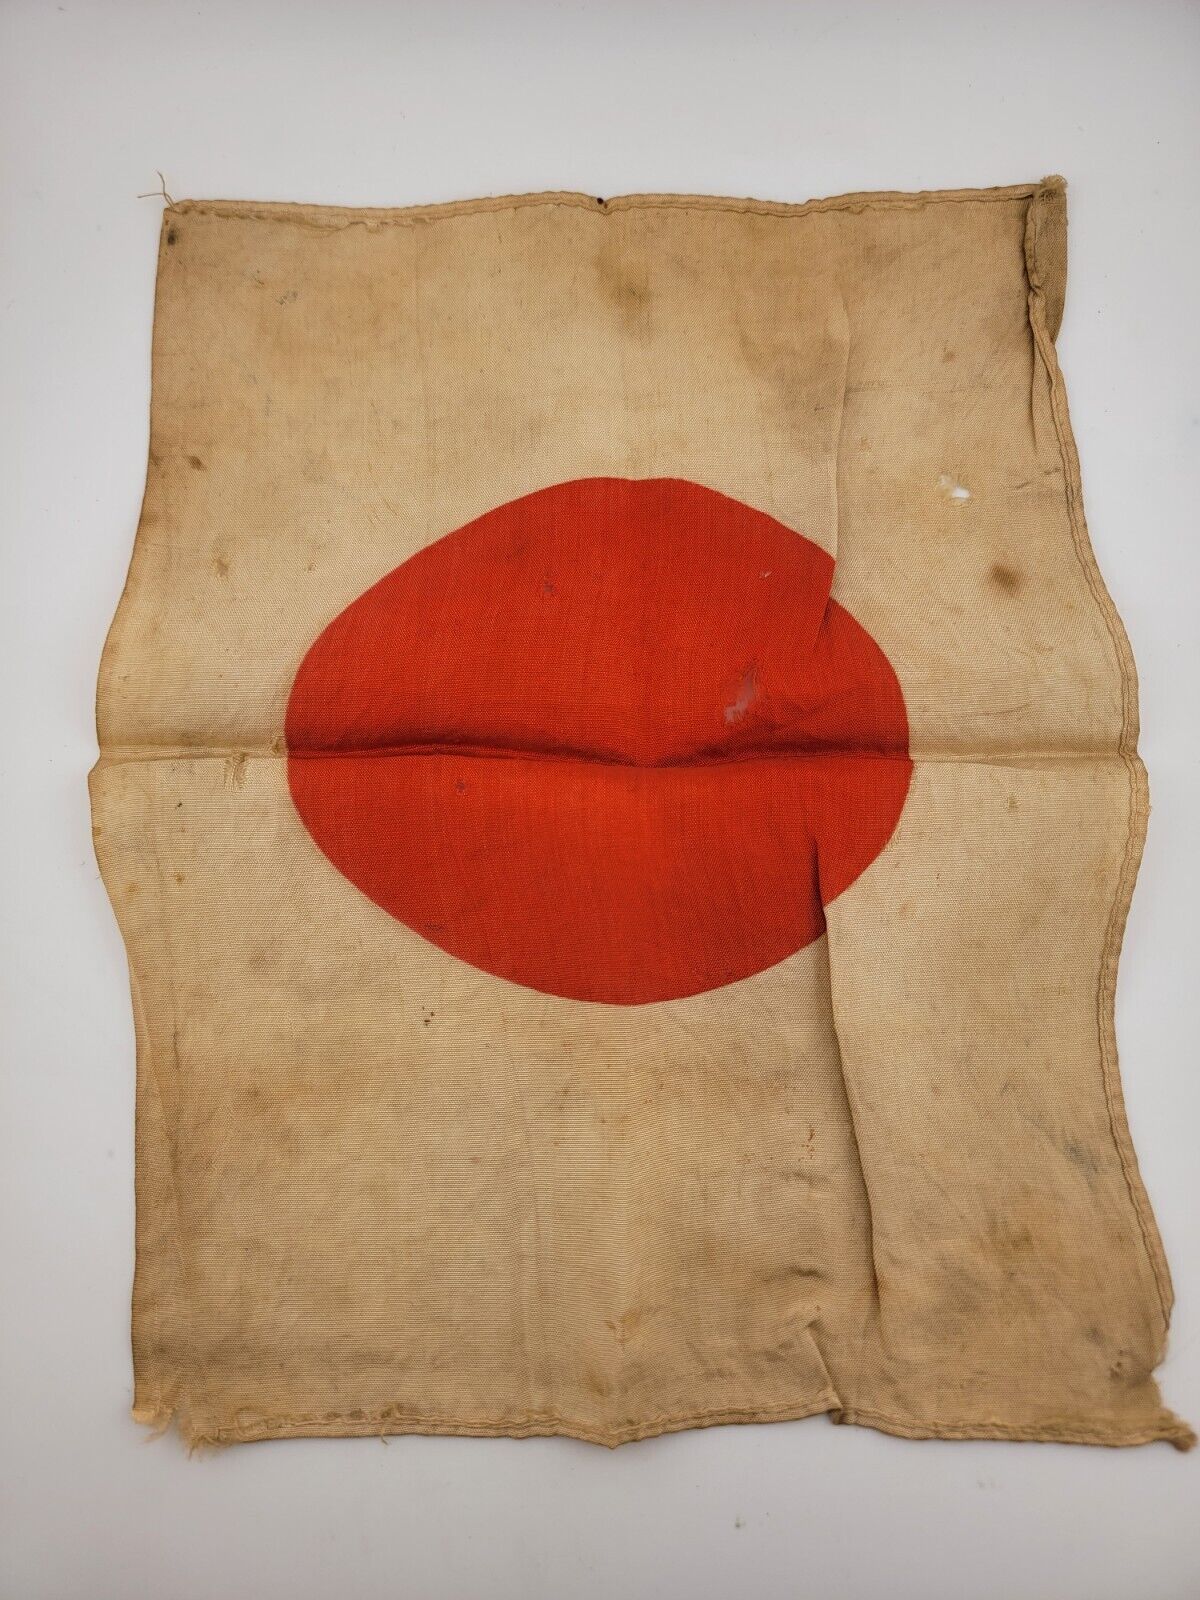 Original WW2 Captured Japanese 